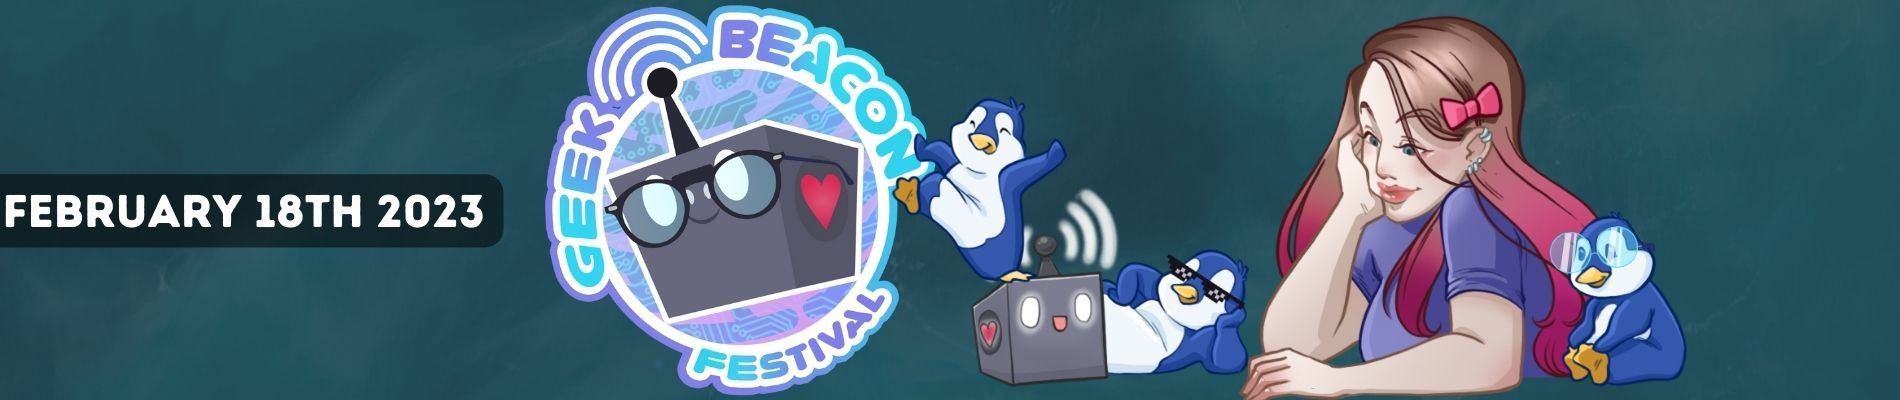 GeekBeacon Festival 2023 Announced!